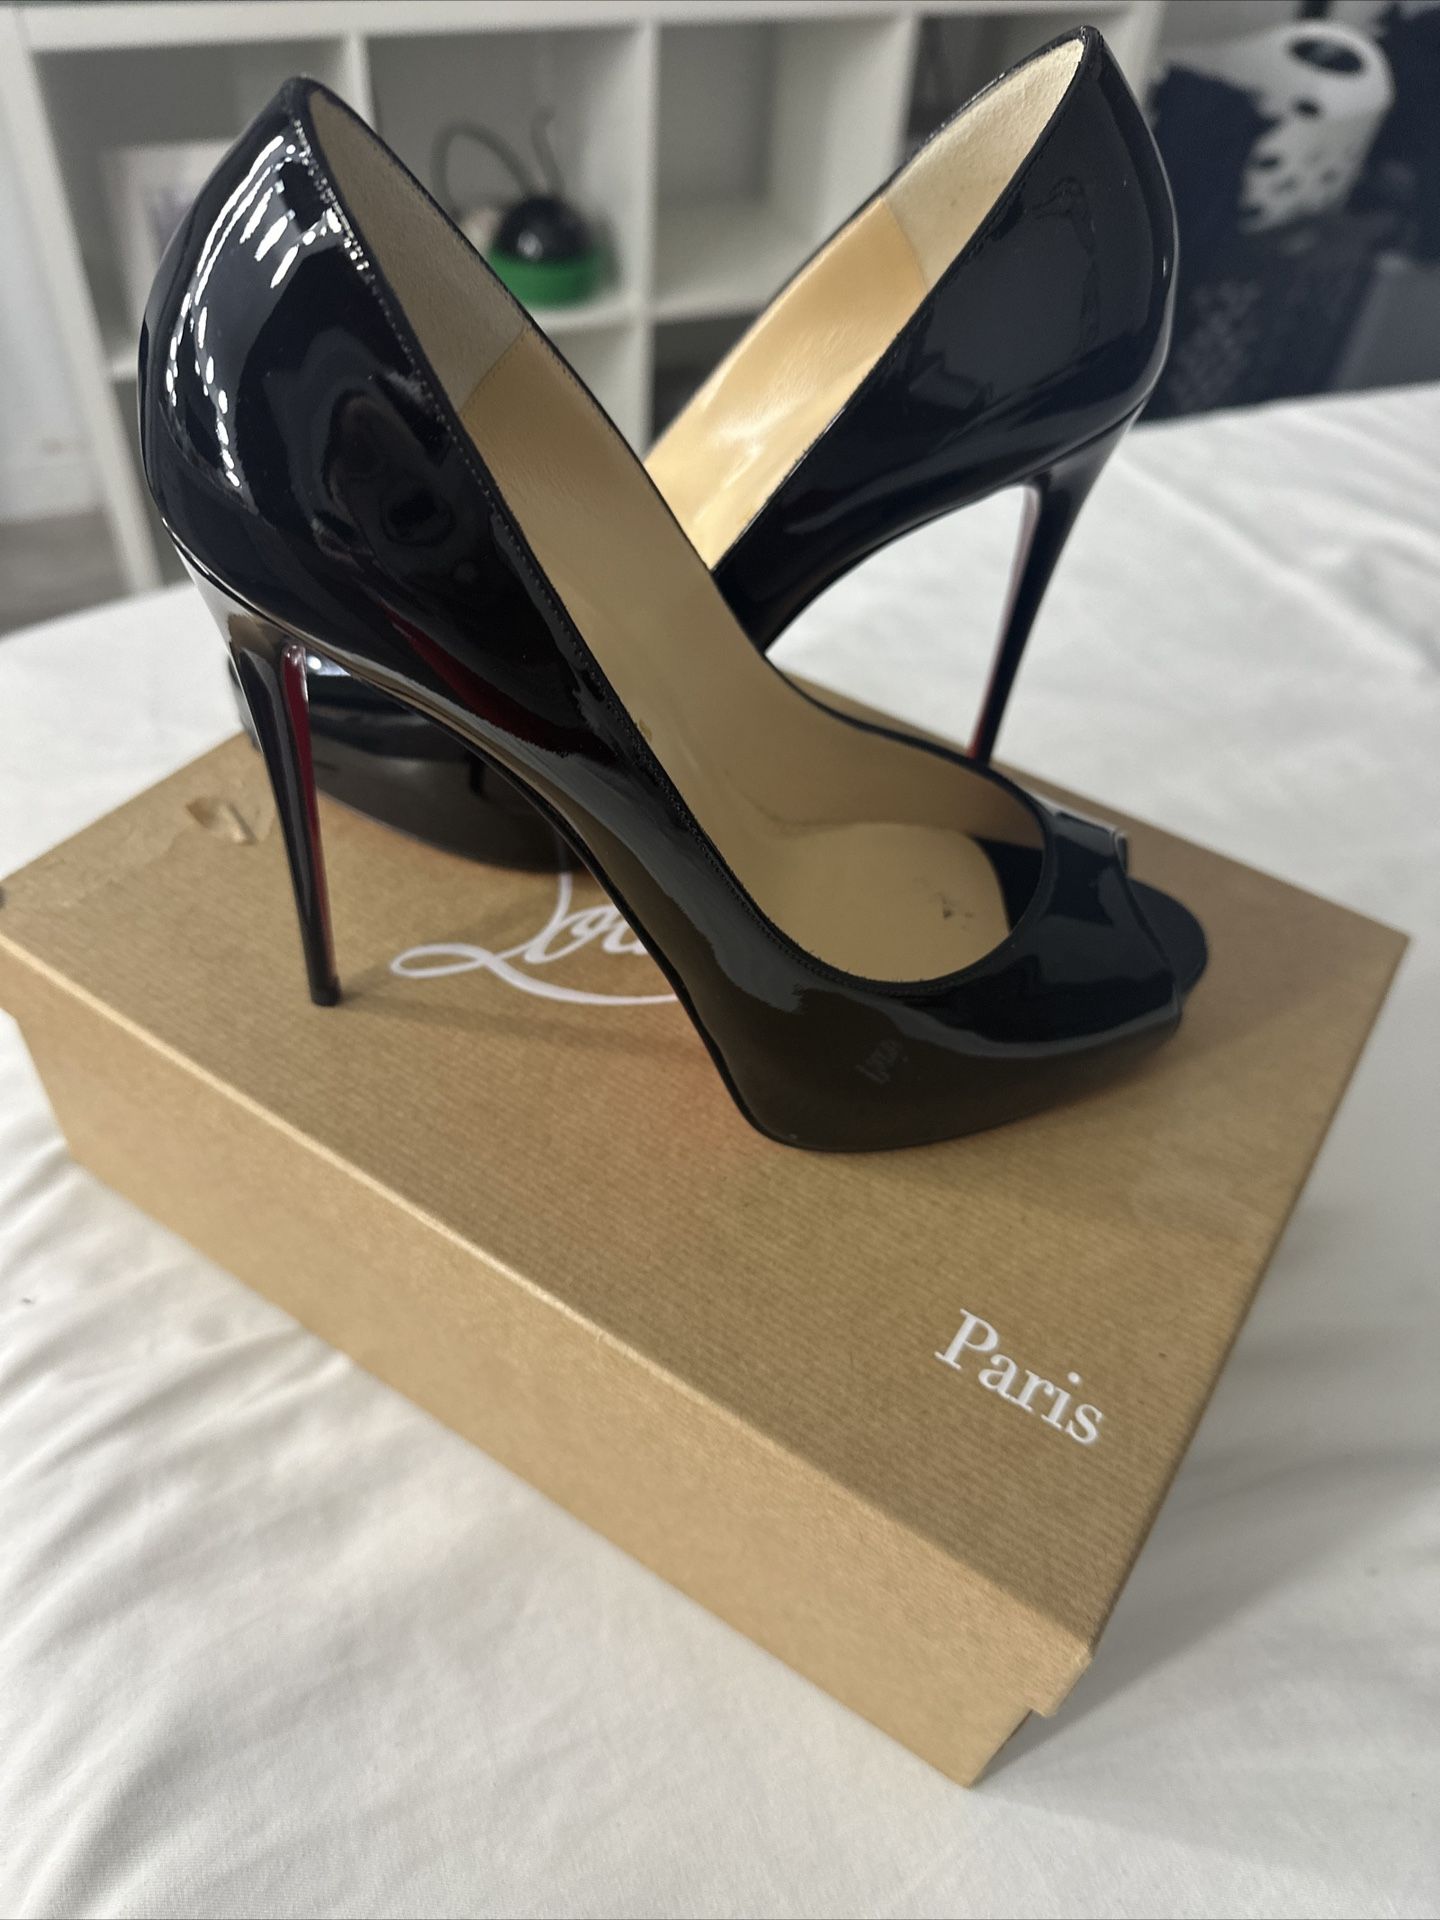 New Very Prive Christian Louboutin Women’s Heels 